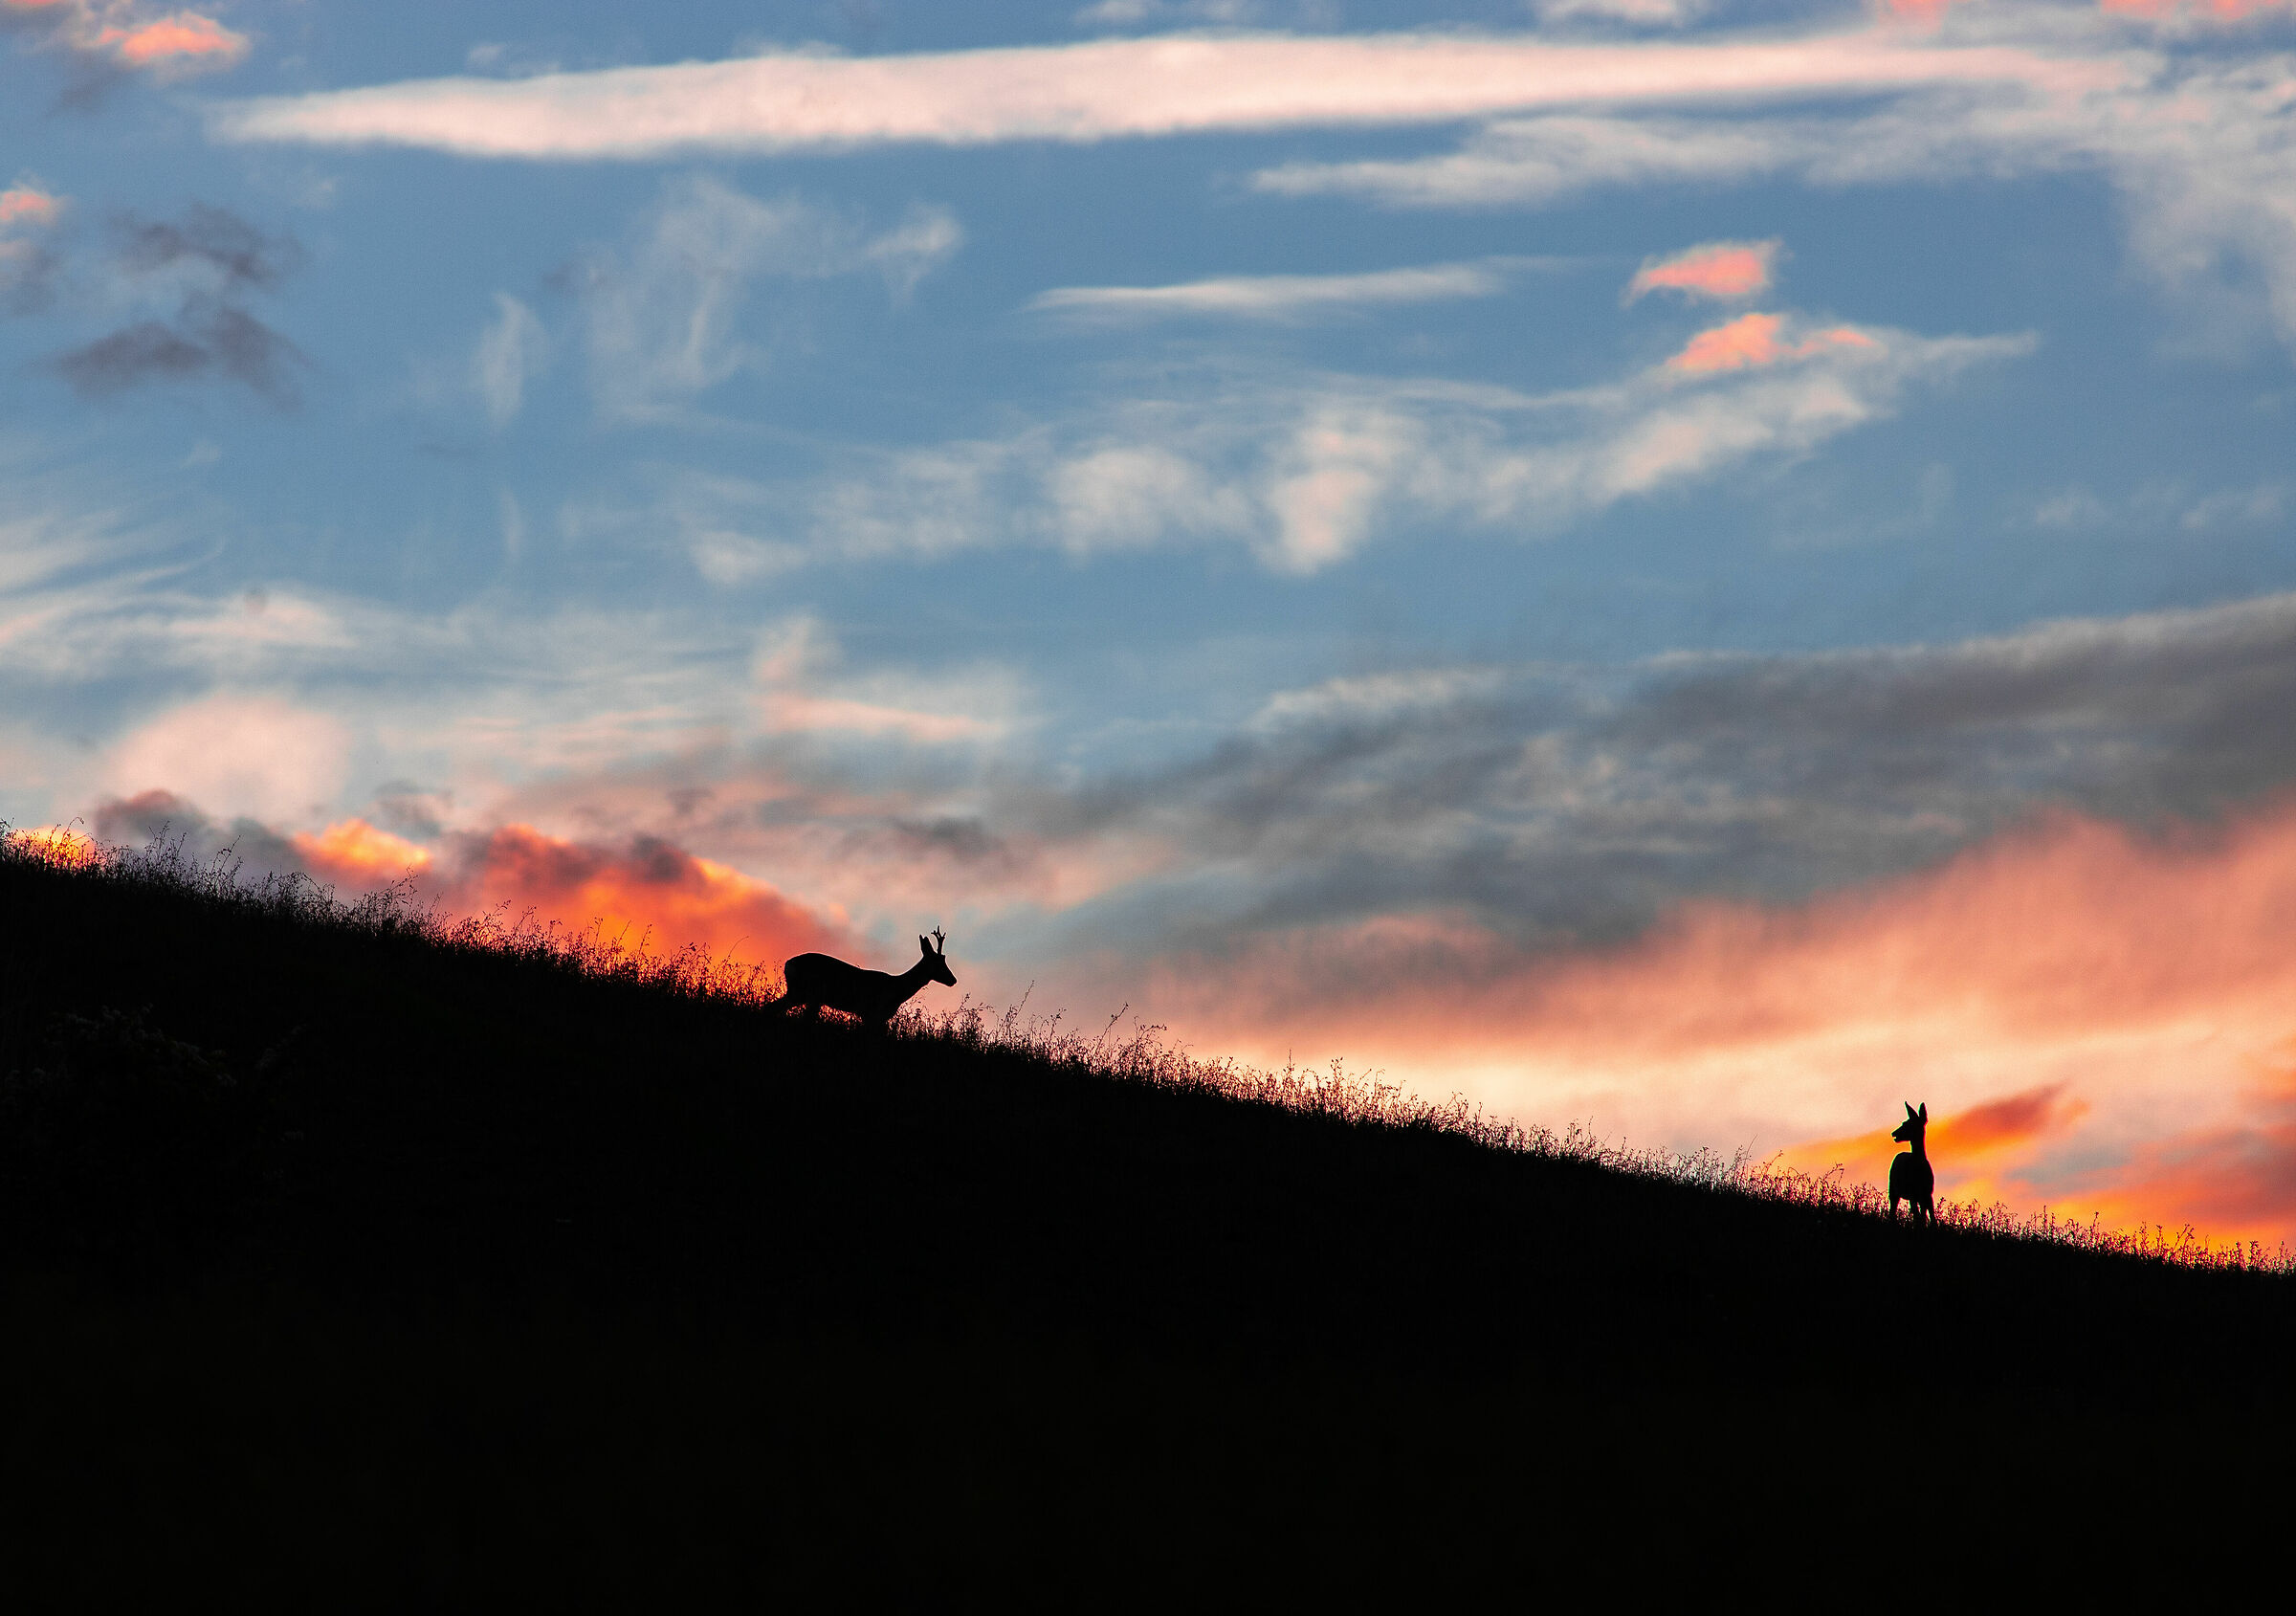 Roe deer at sunset...